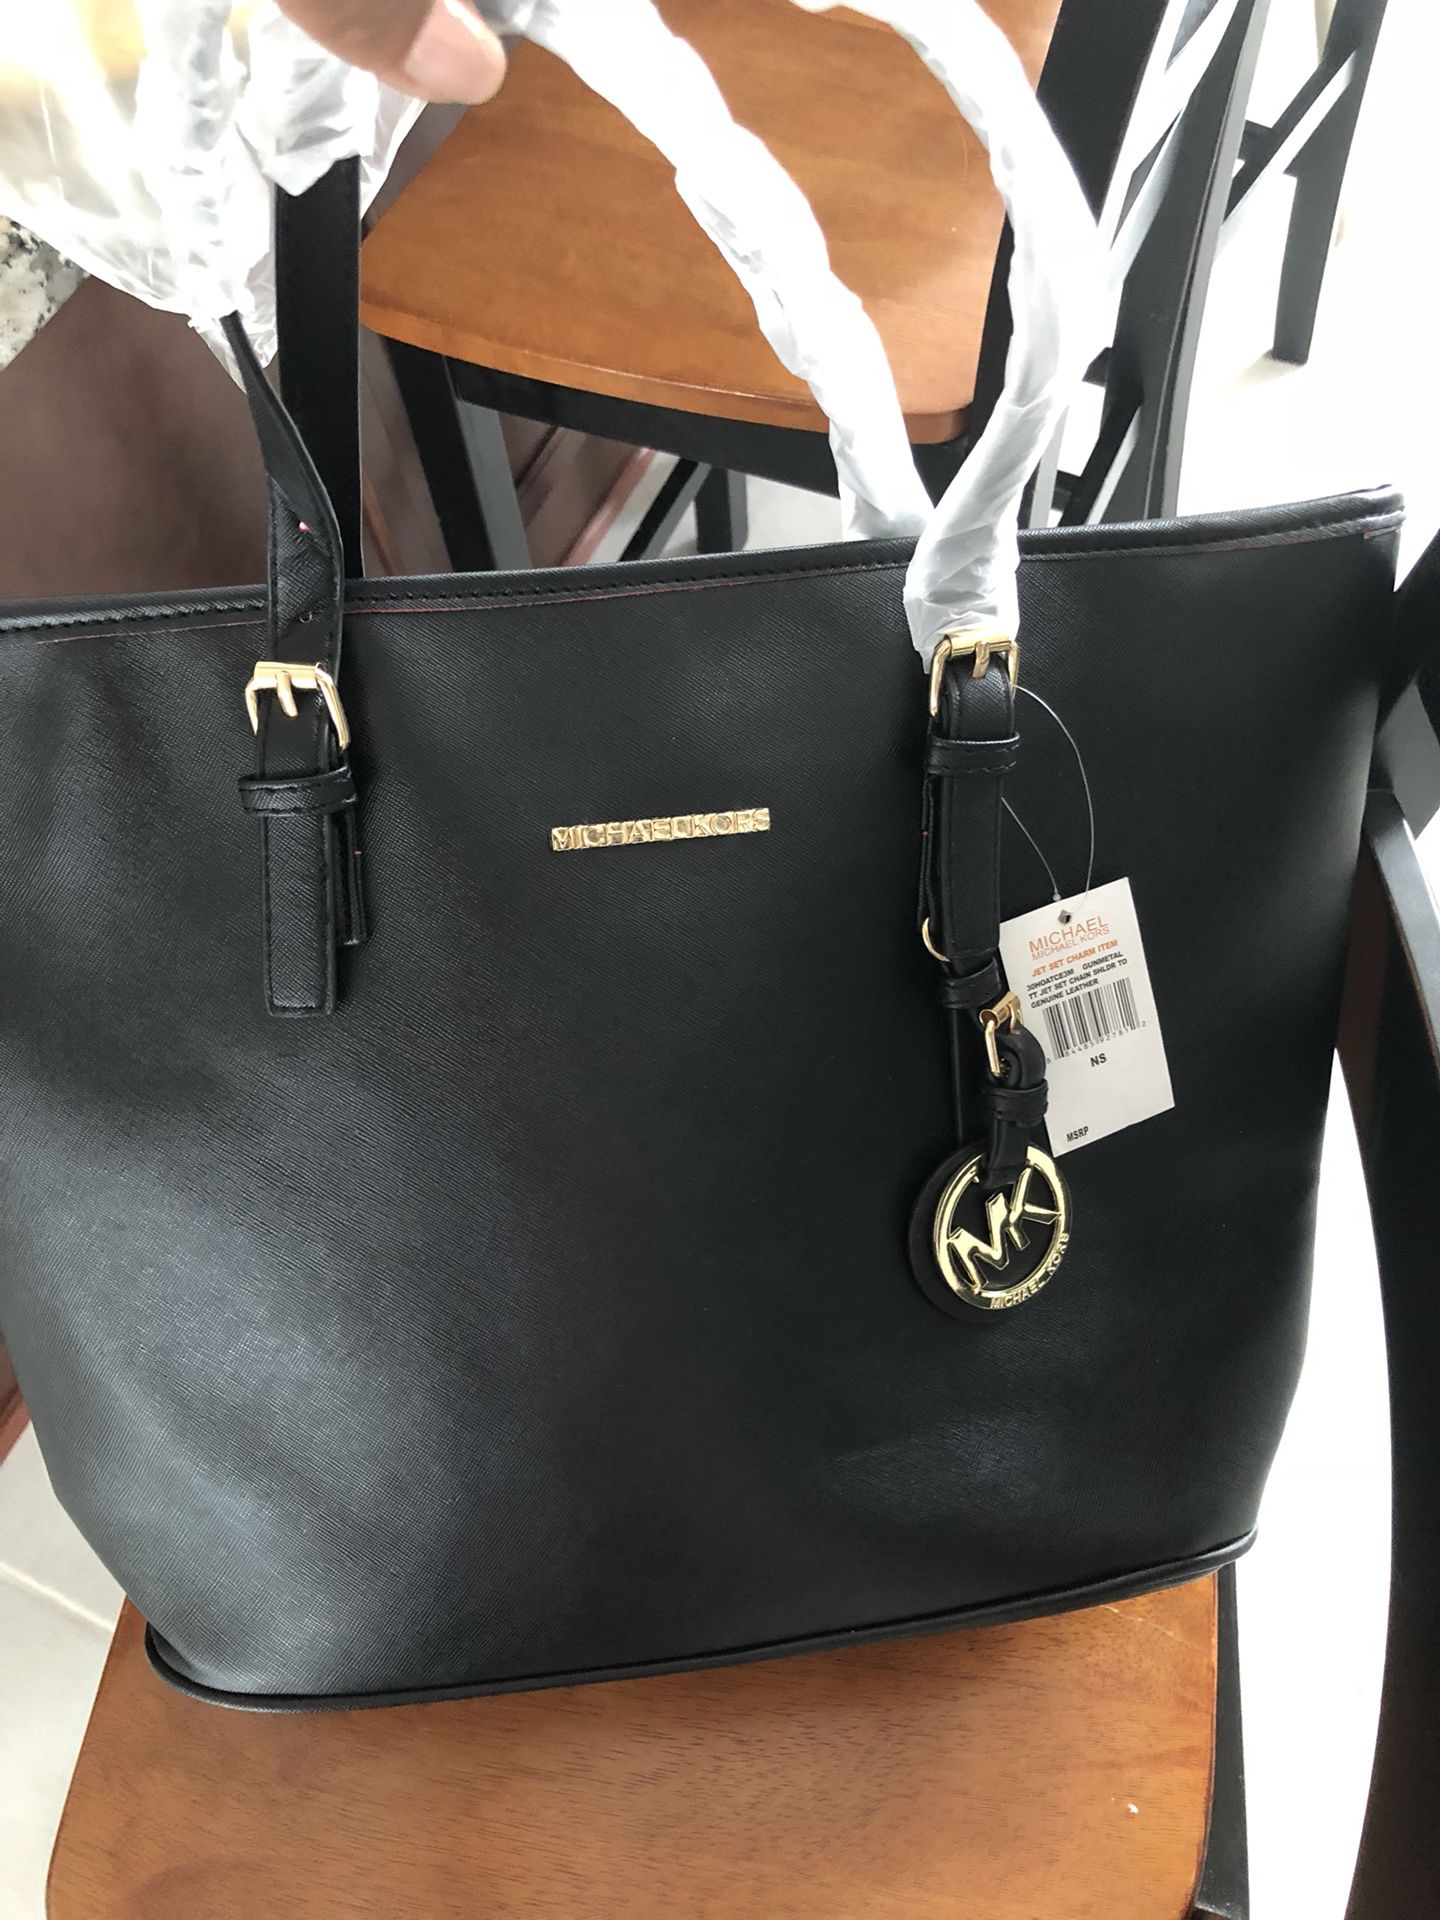 Mk handbag new never used color black